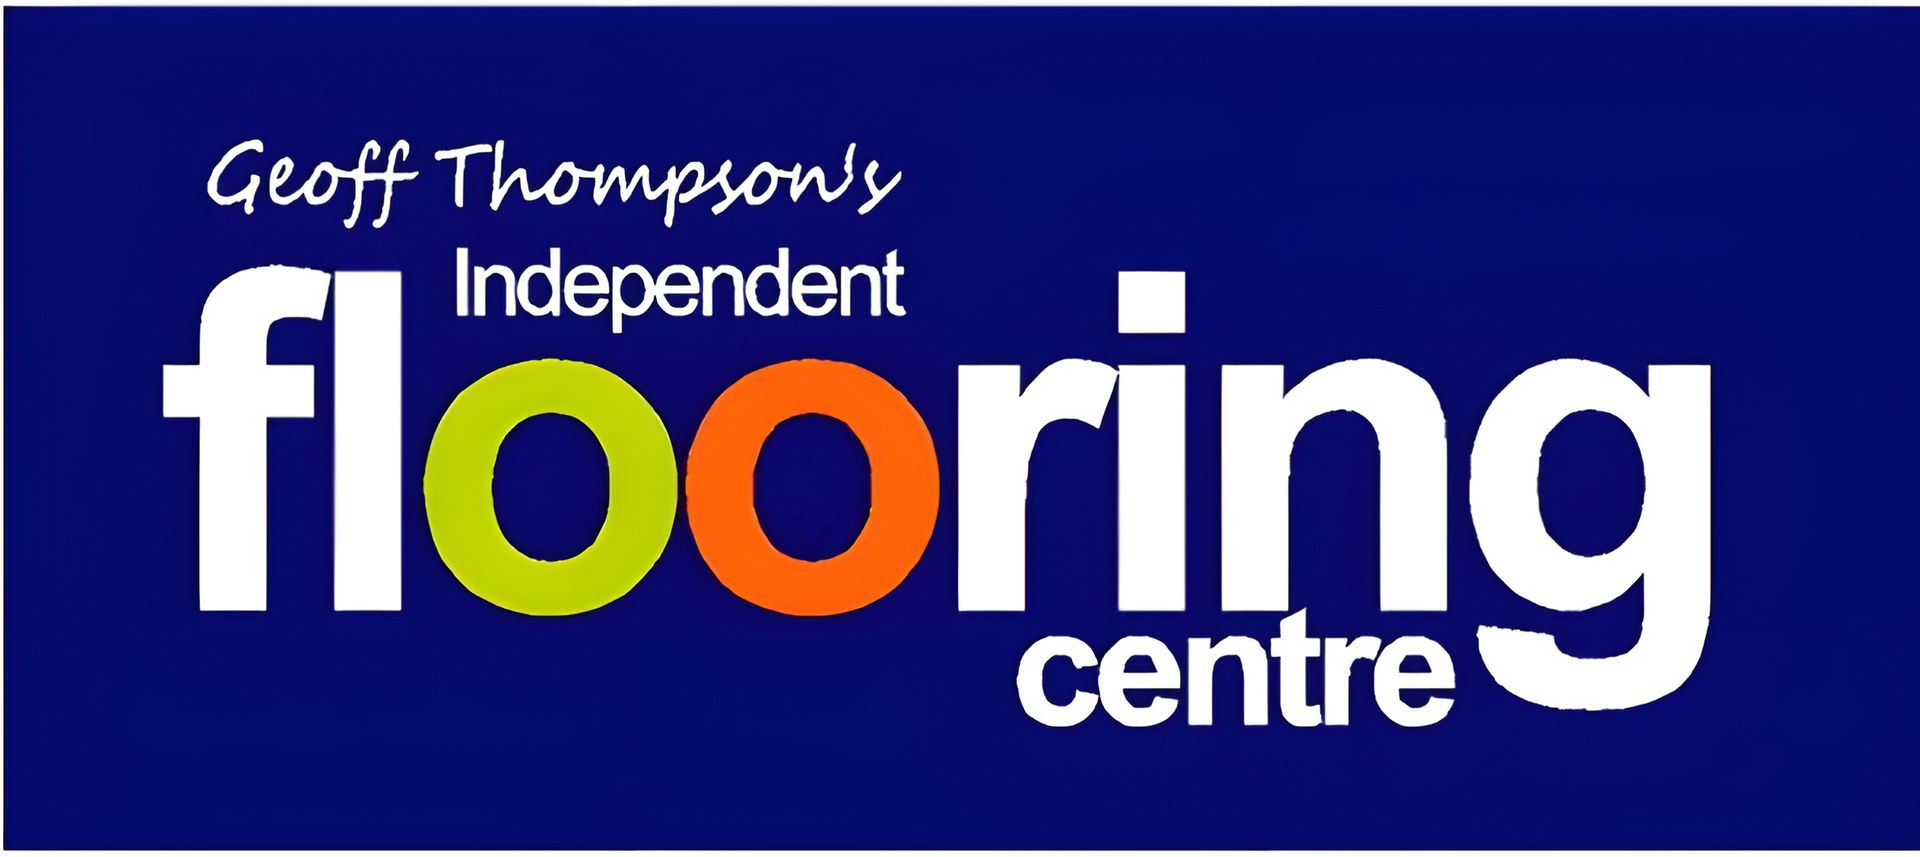 Geoff Thompson’s Independent Flooring Centre: Flooring Supply & Installation